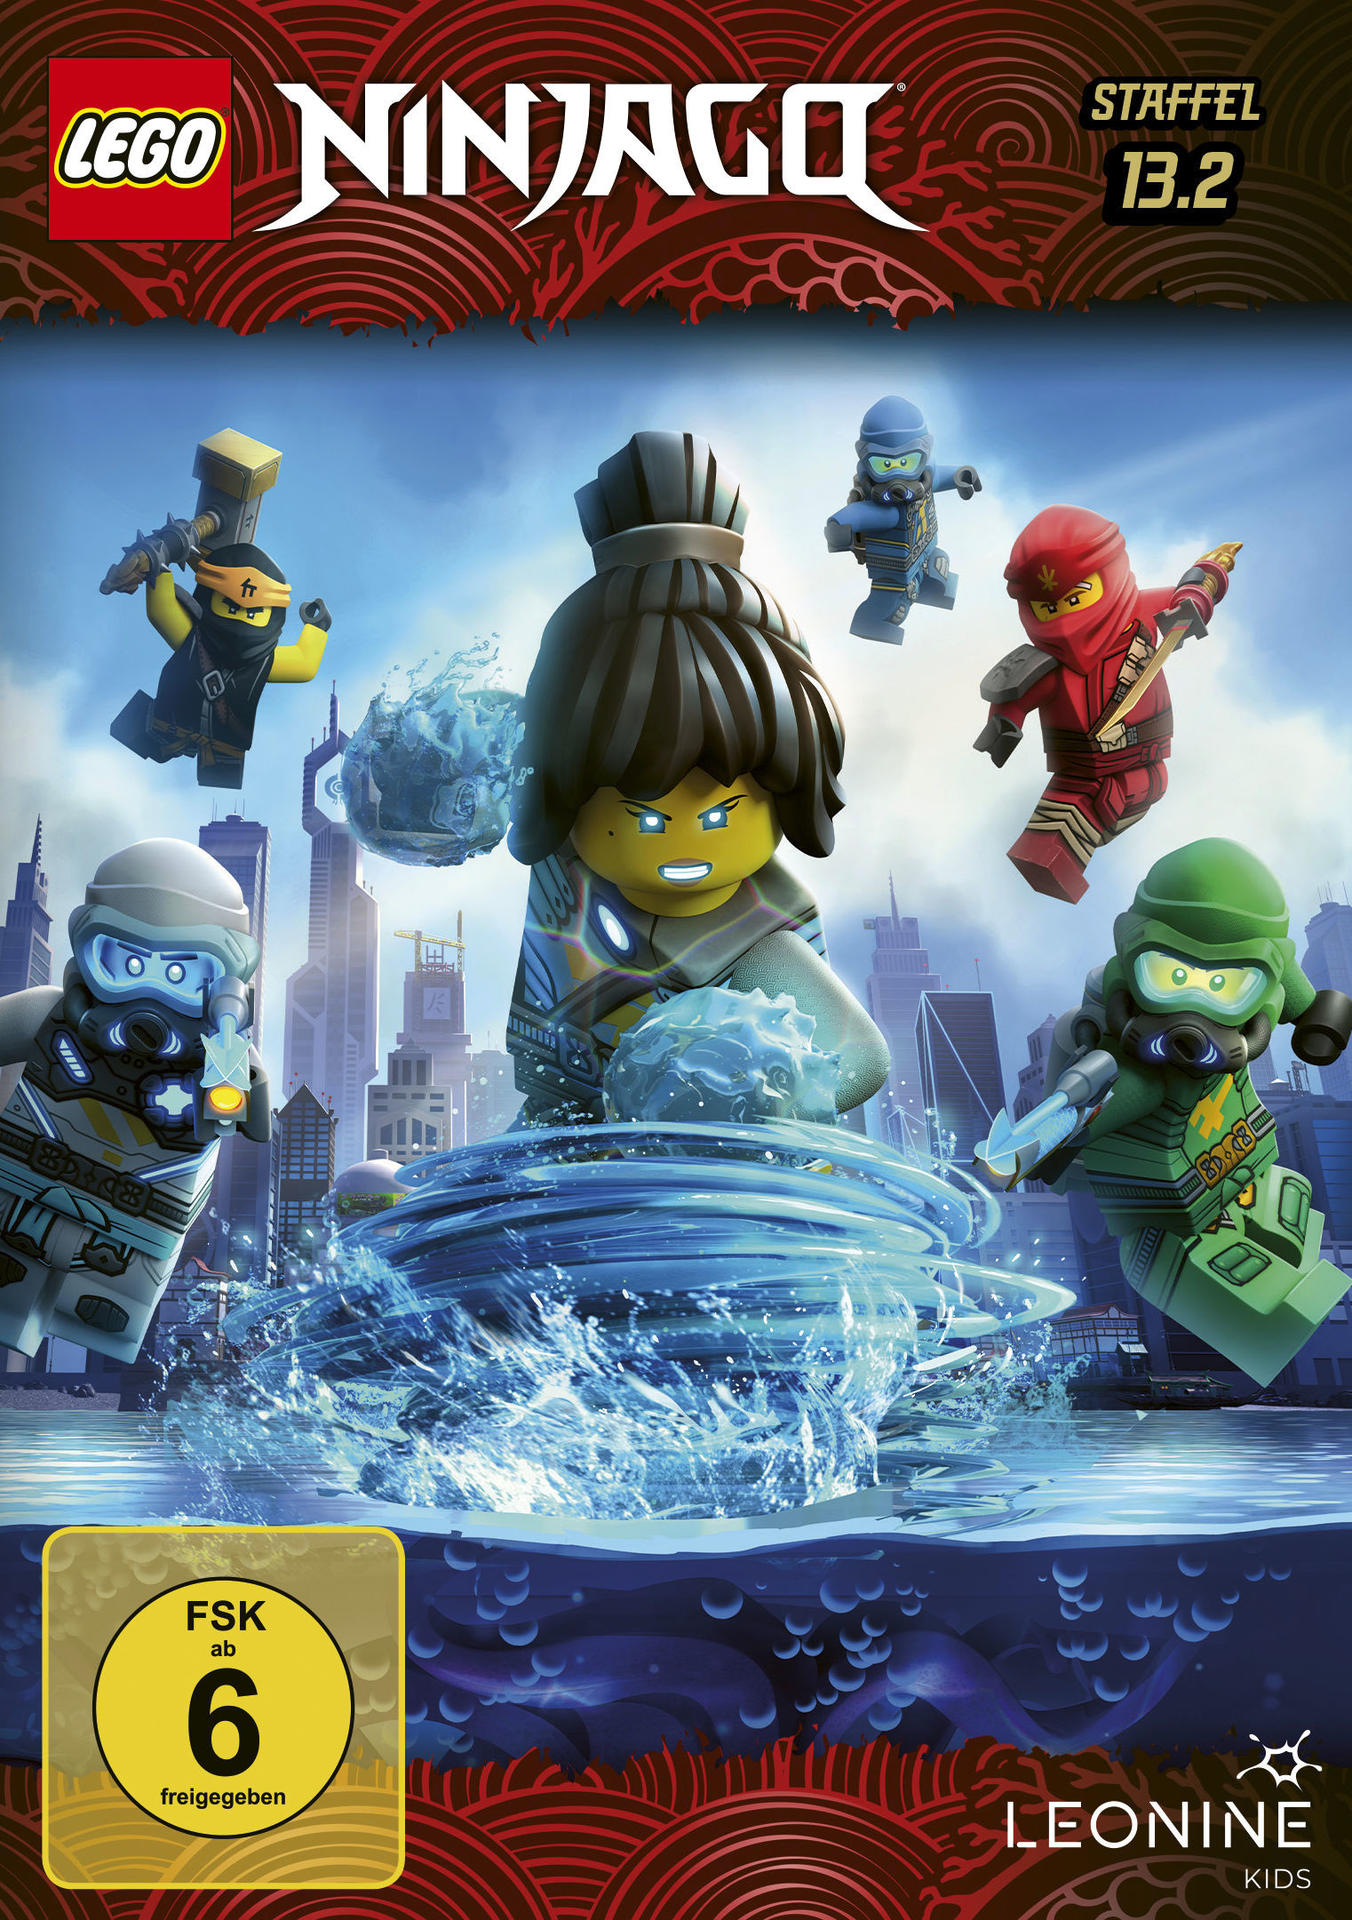 Staffel LEGO Ninjago 13.2 DVD